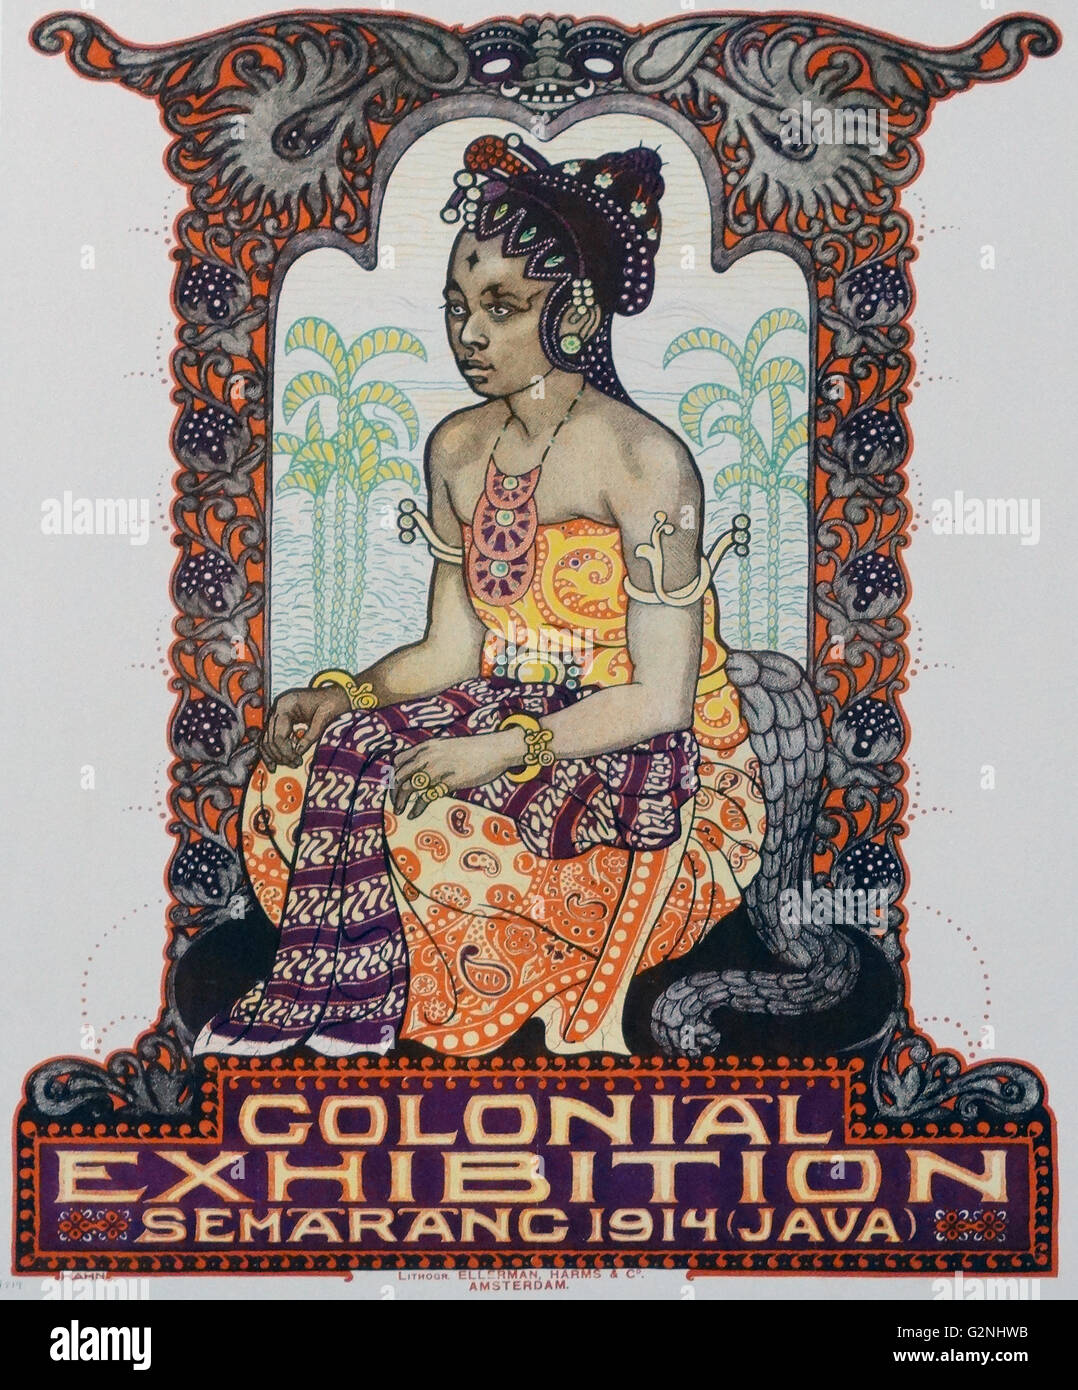 Colonial Exhibition, Semaranc, Java, 1914. Stock Photo